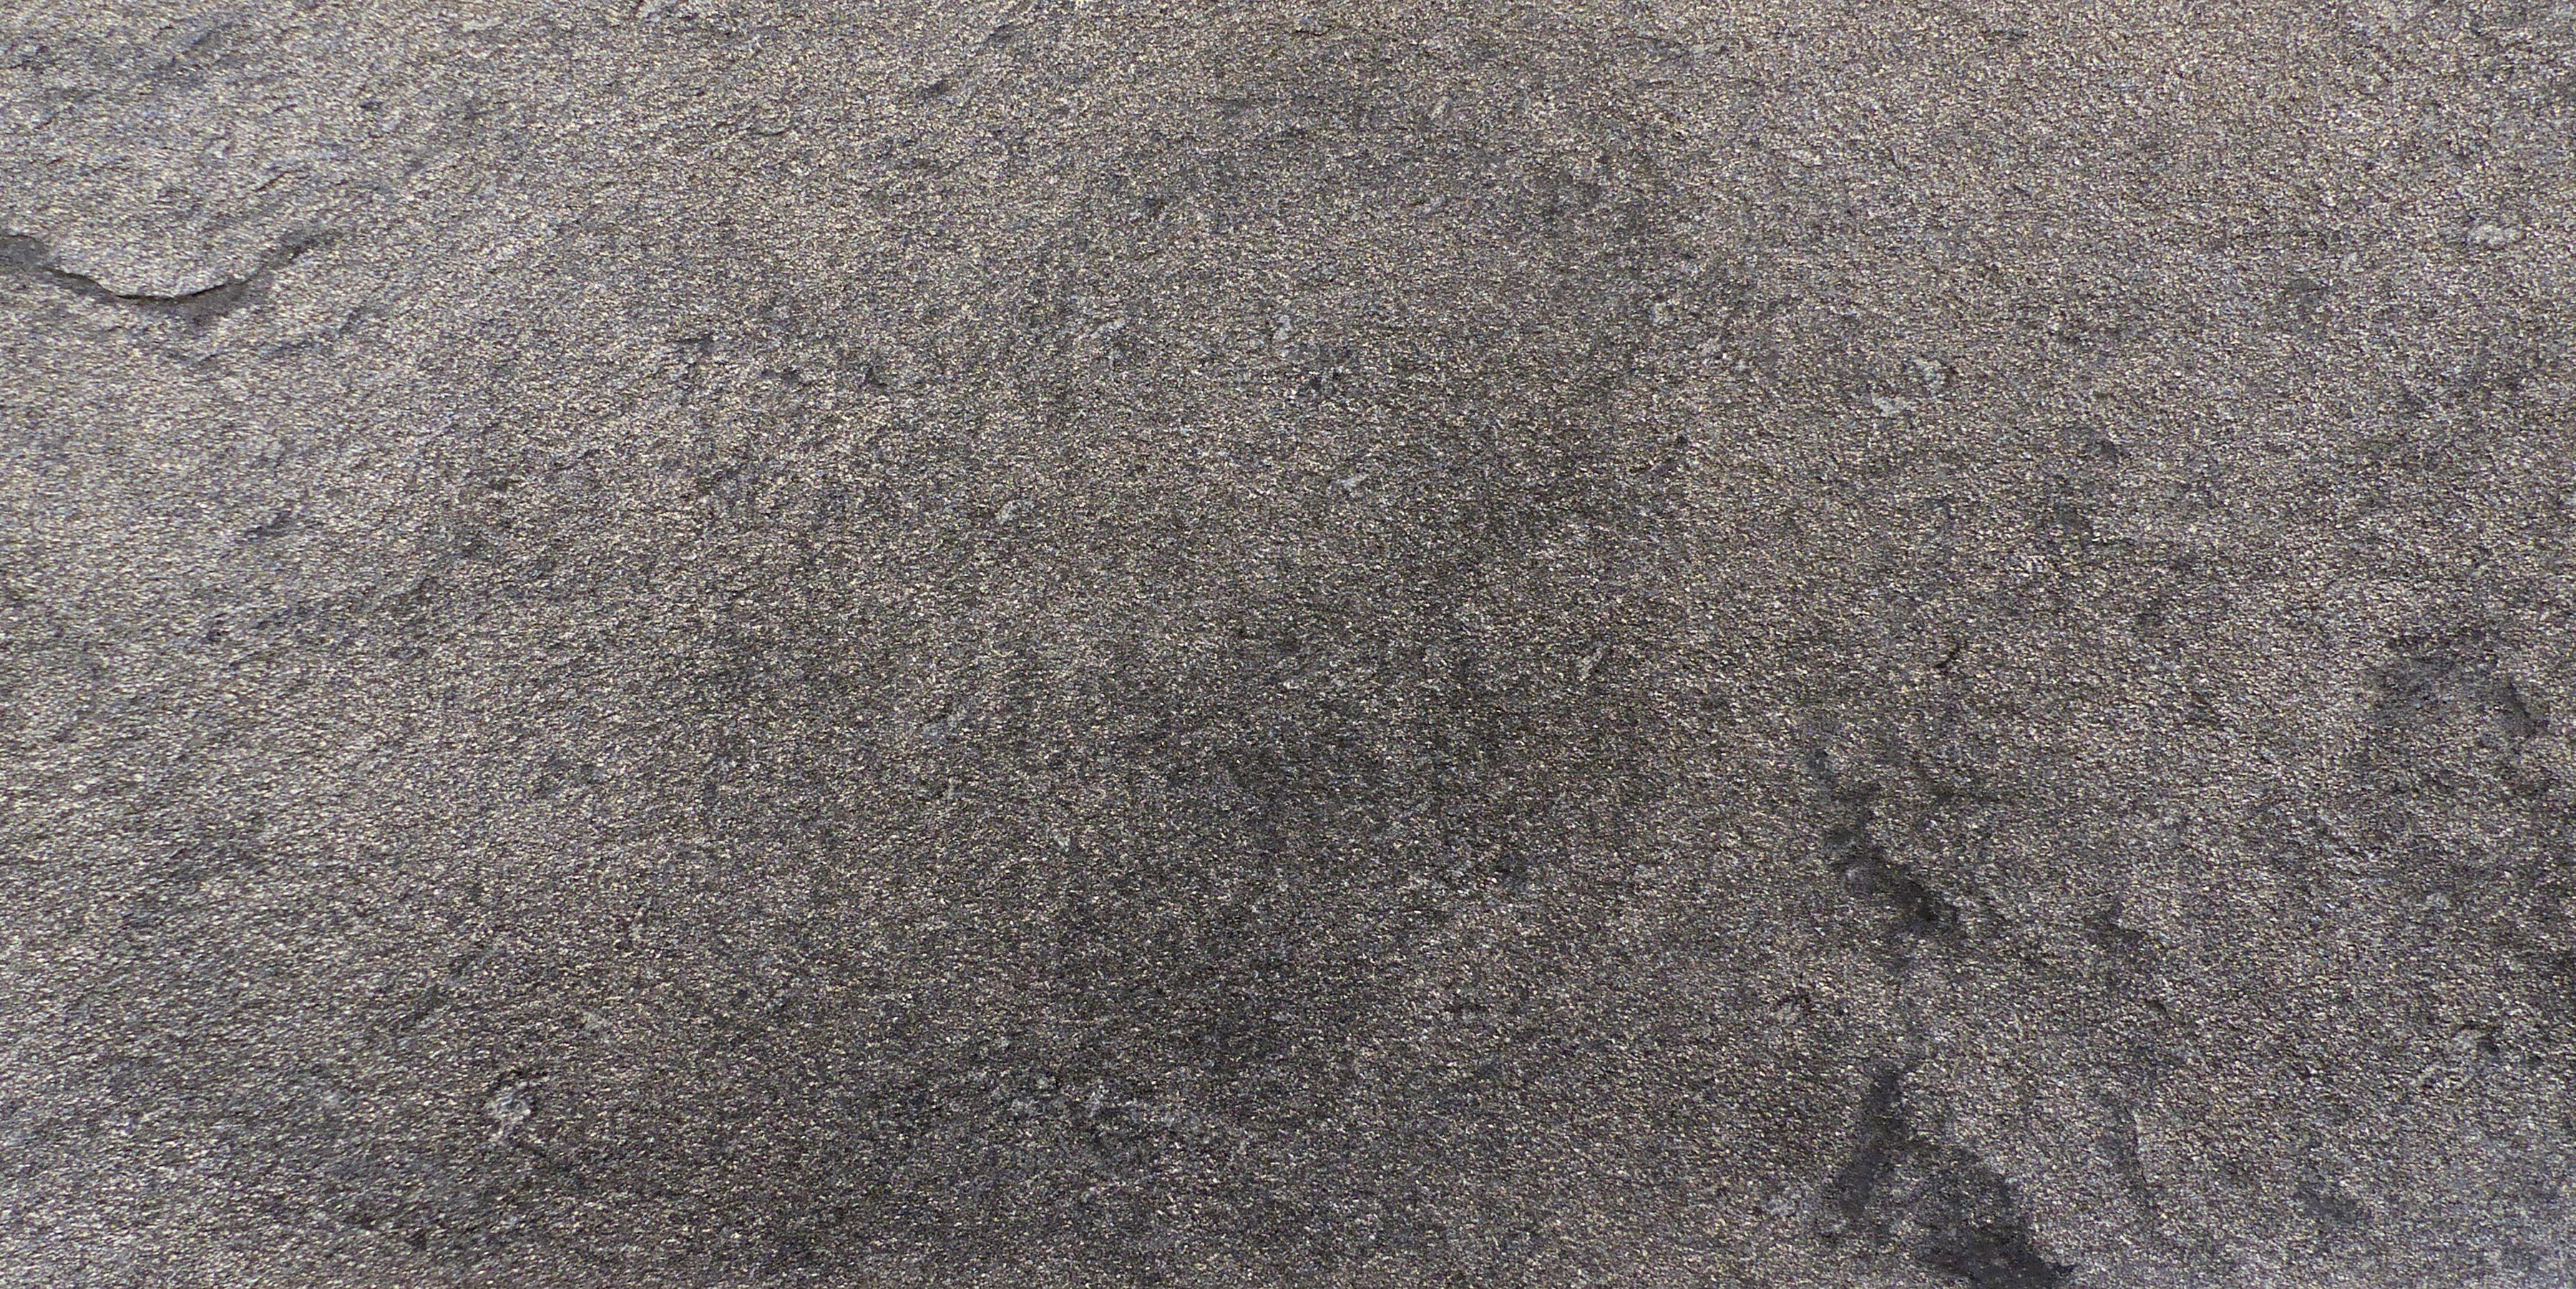 Slate Lite Wandpaneel qm, cm, Echtstein Black BxL: aus 120x240 Pearl, (1-tlg) 2,88